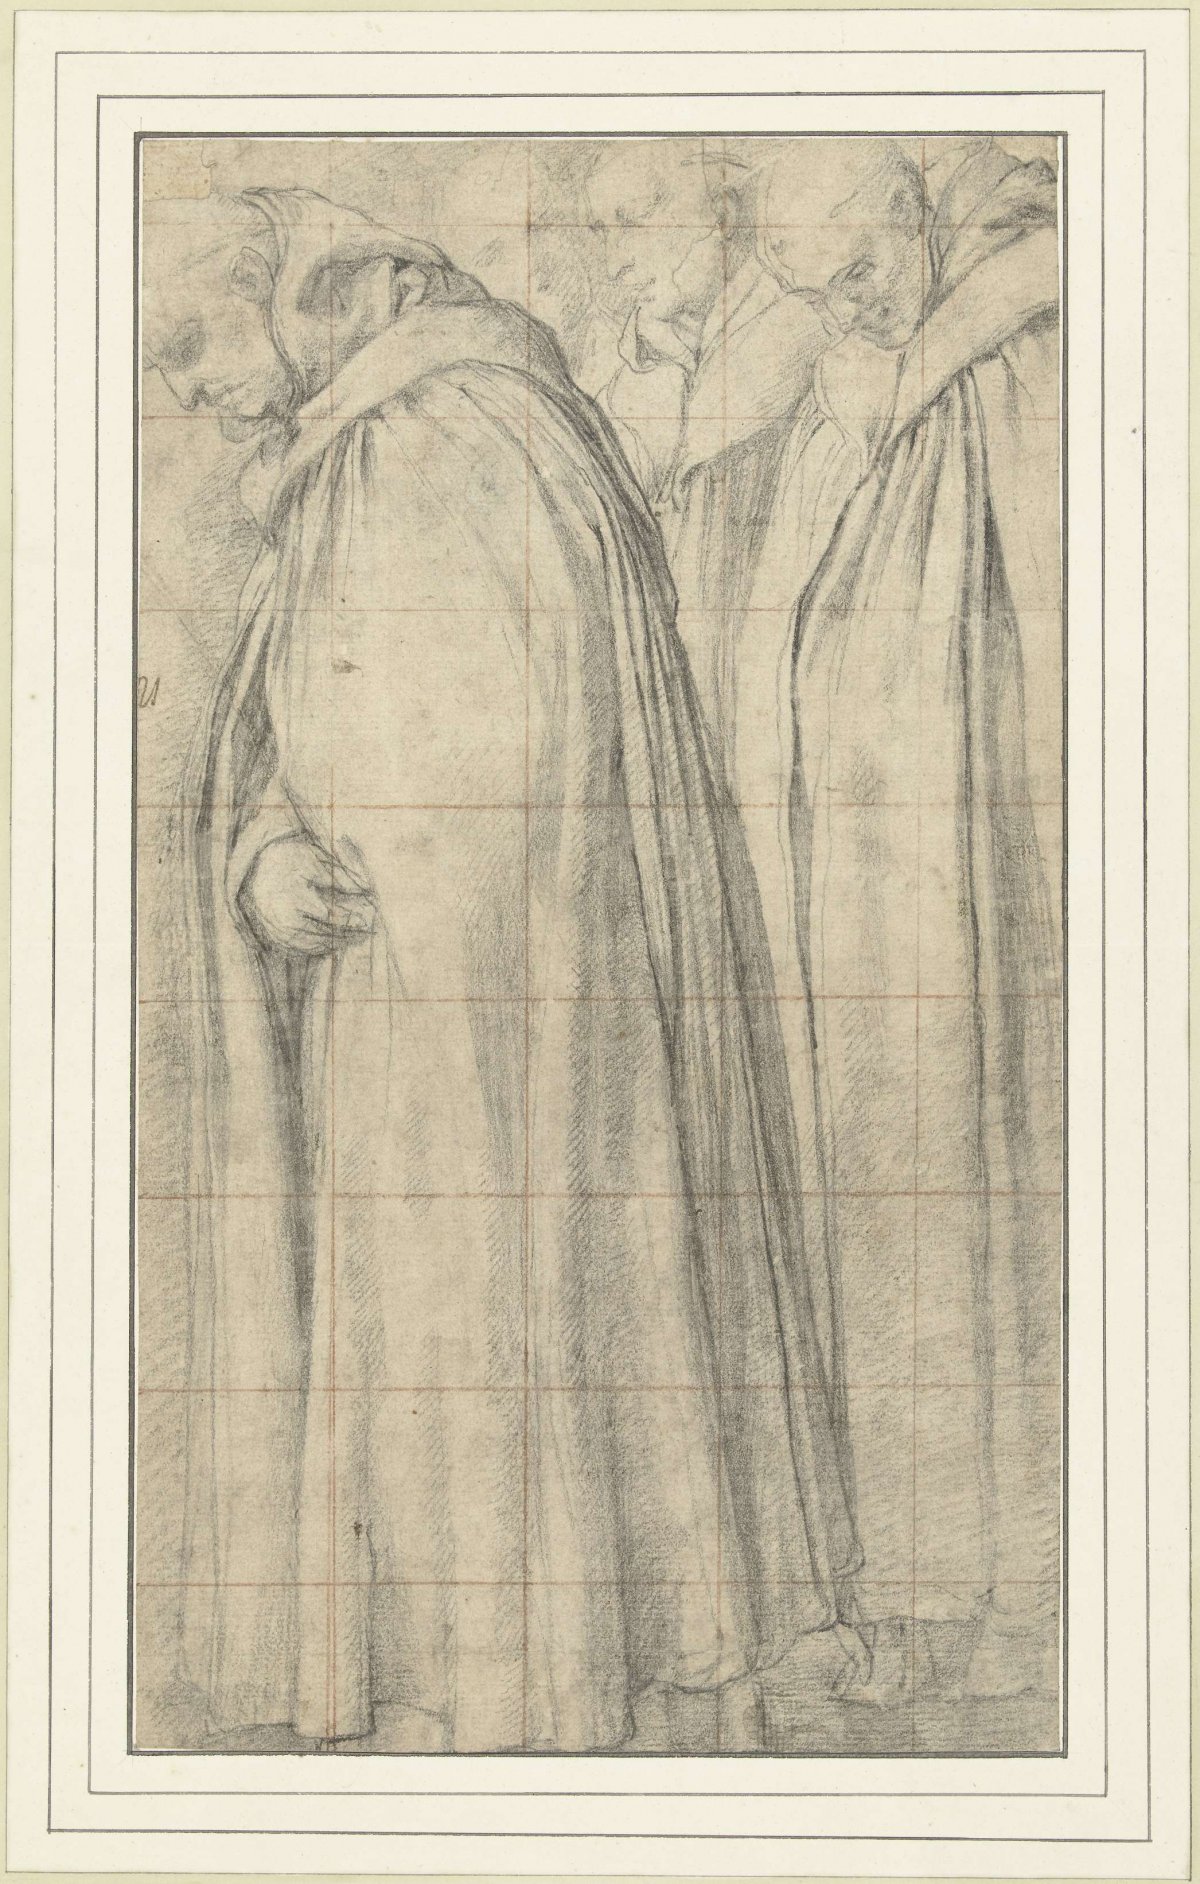 Procession of three monks, Bernardino Poccetti, 1558 - 1612